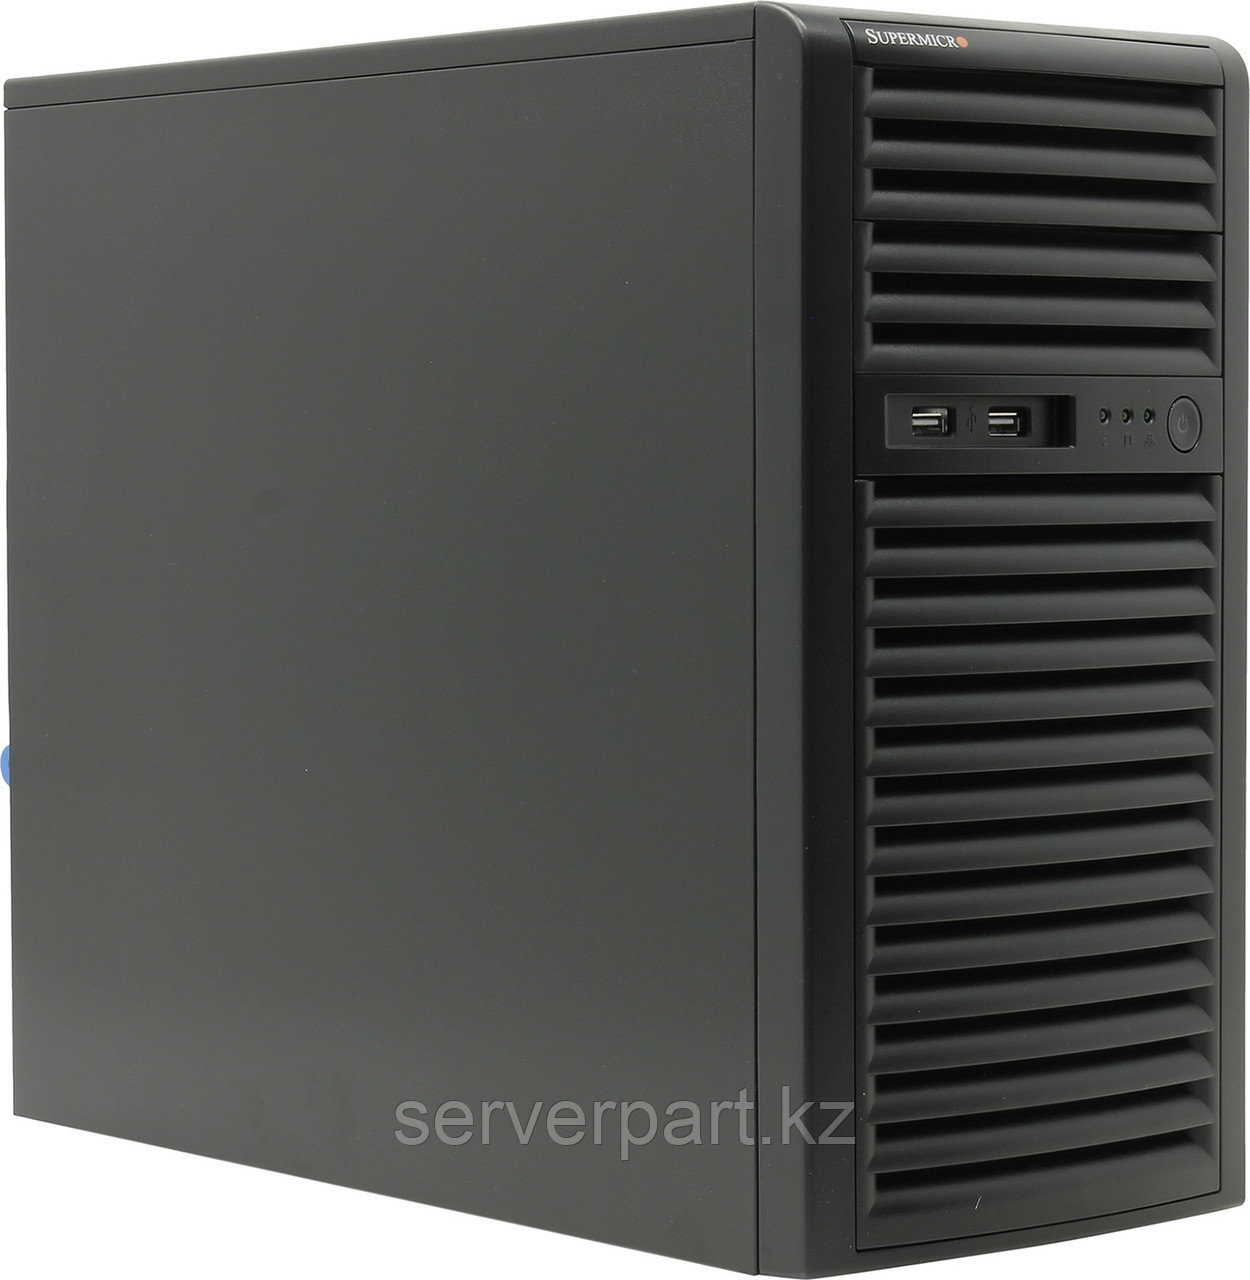 Сервер Supermicro SYS-5039D Tower/4-core intel xeon E3-1220v6 3GHz/32GB EUDIMM/1x480GB SSD RI Hyb